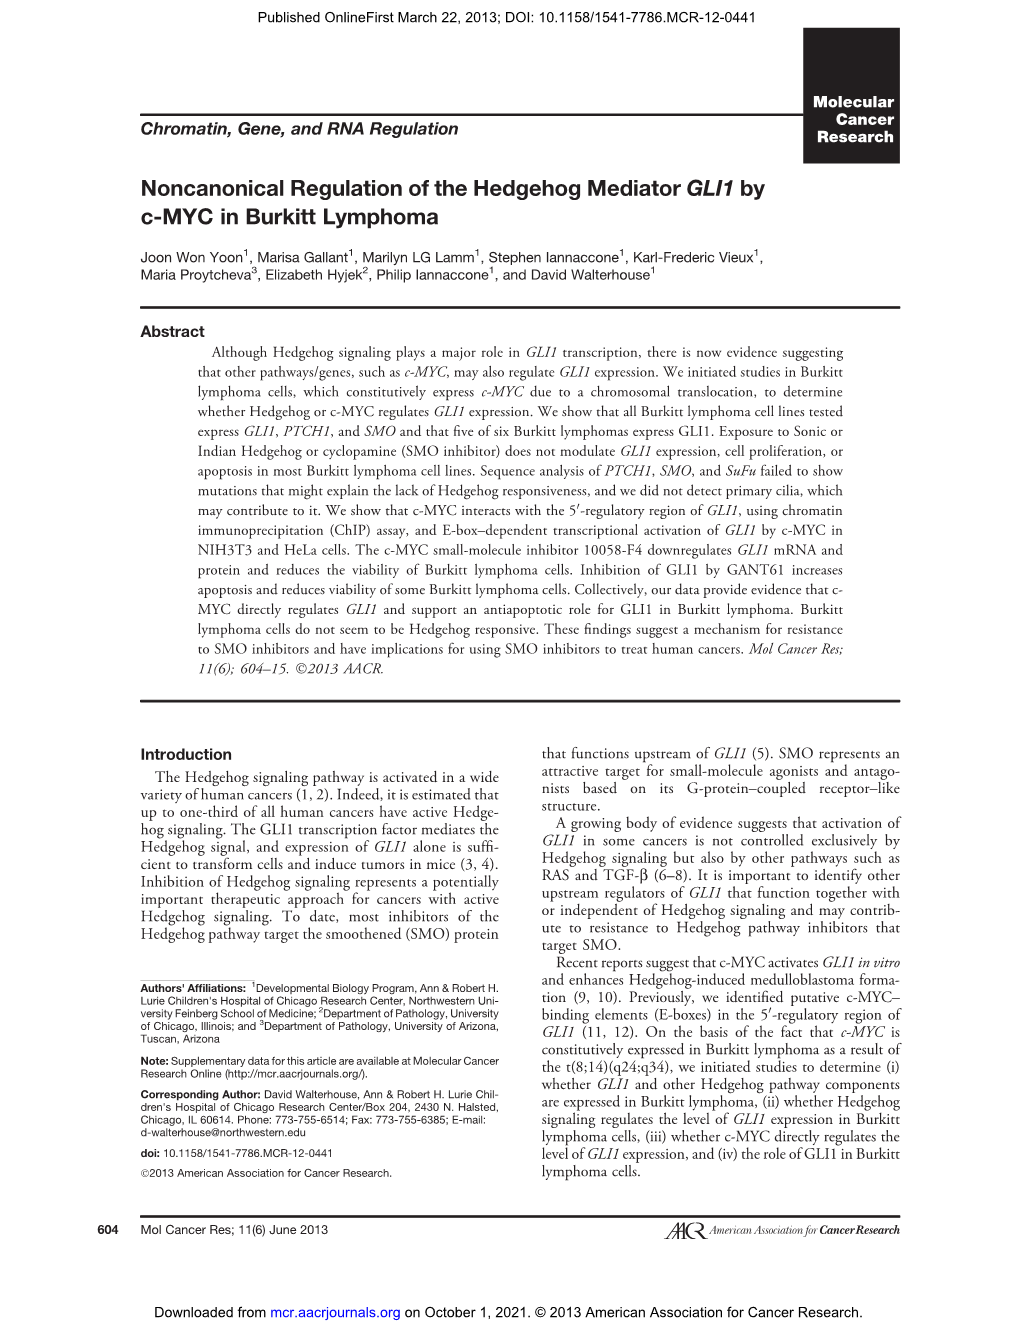 Noncanonical Regulation of the Hedgehog Mediator GLI1 by C-MYC in Burkitt Lymphoma